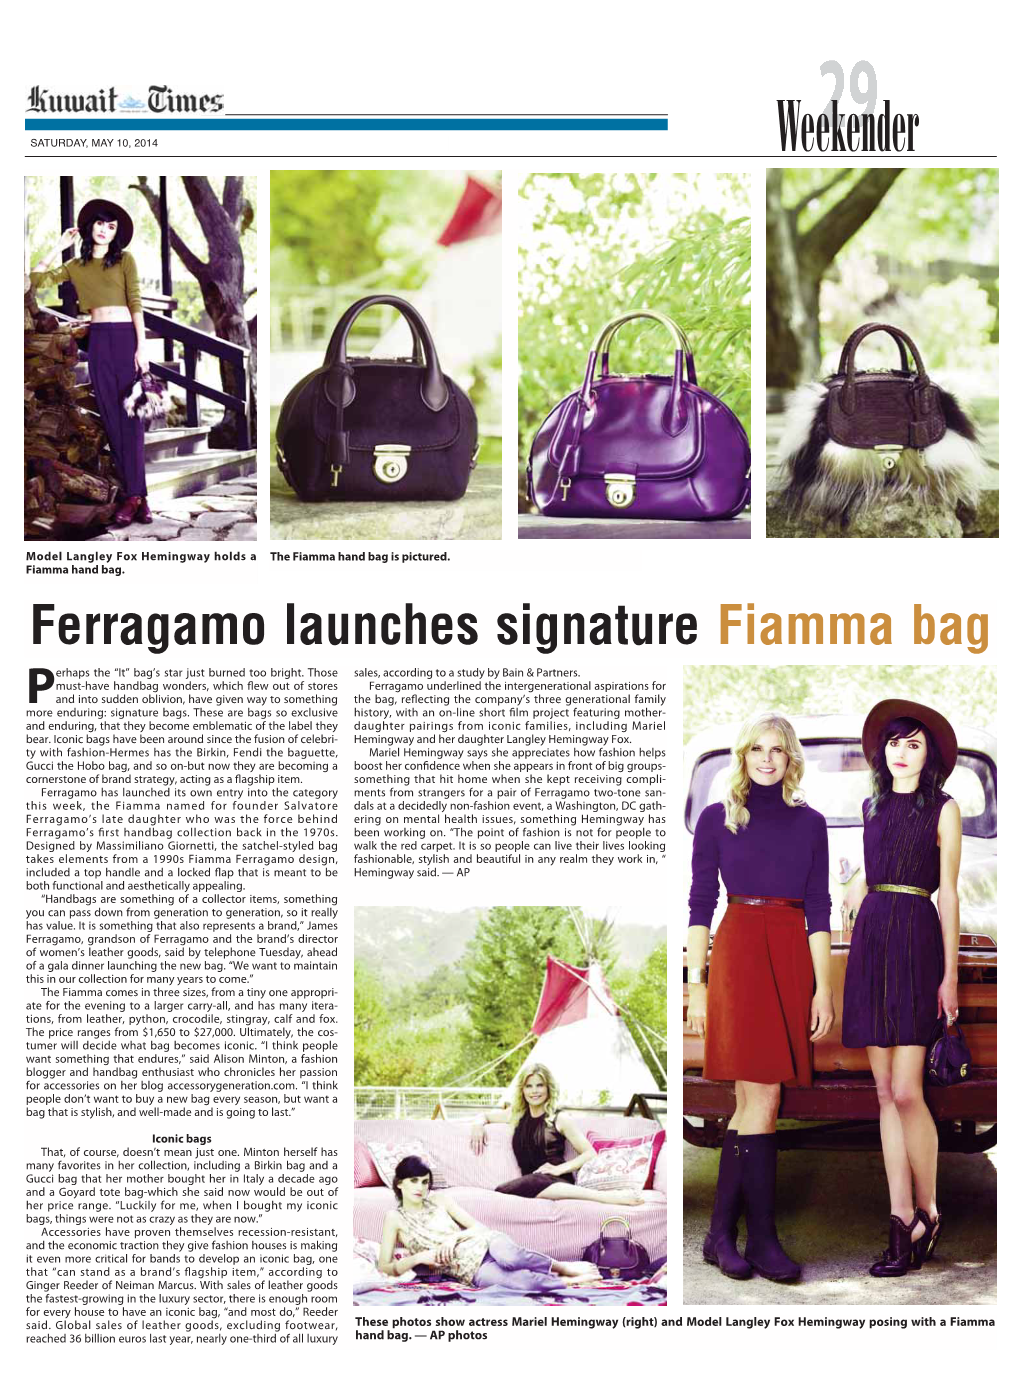 Ferragamo Launches Signature Fiamma Bag Erhaps the “It” Bag’S Star Just Burned Too Bright